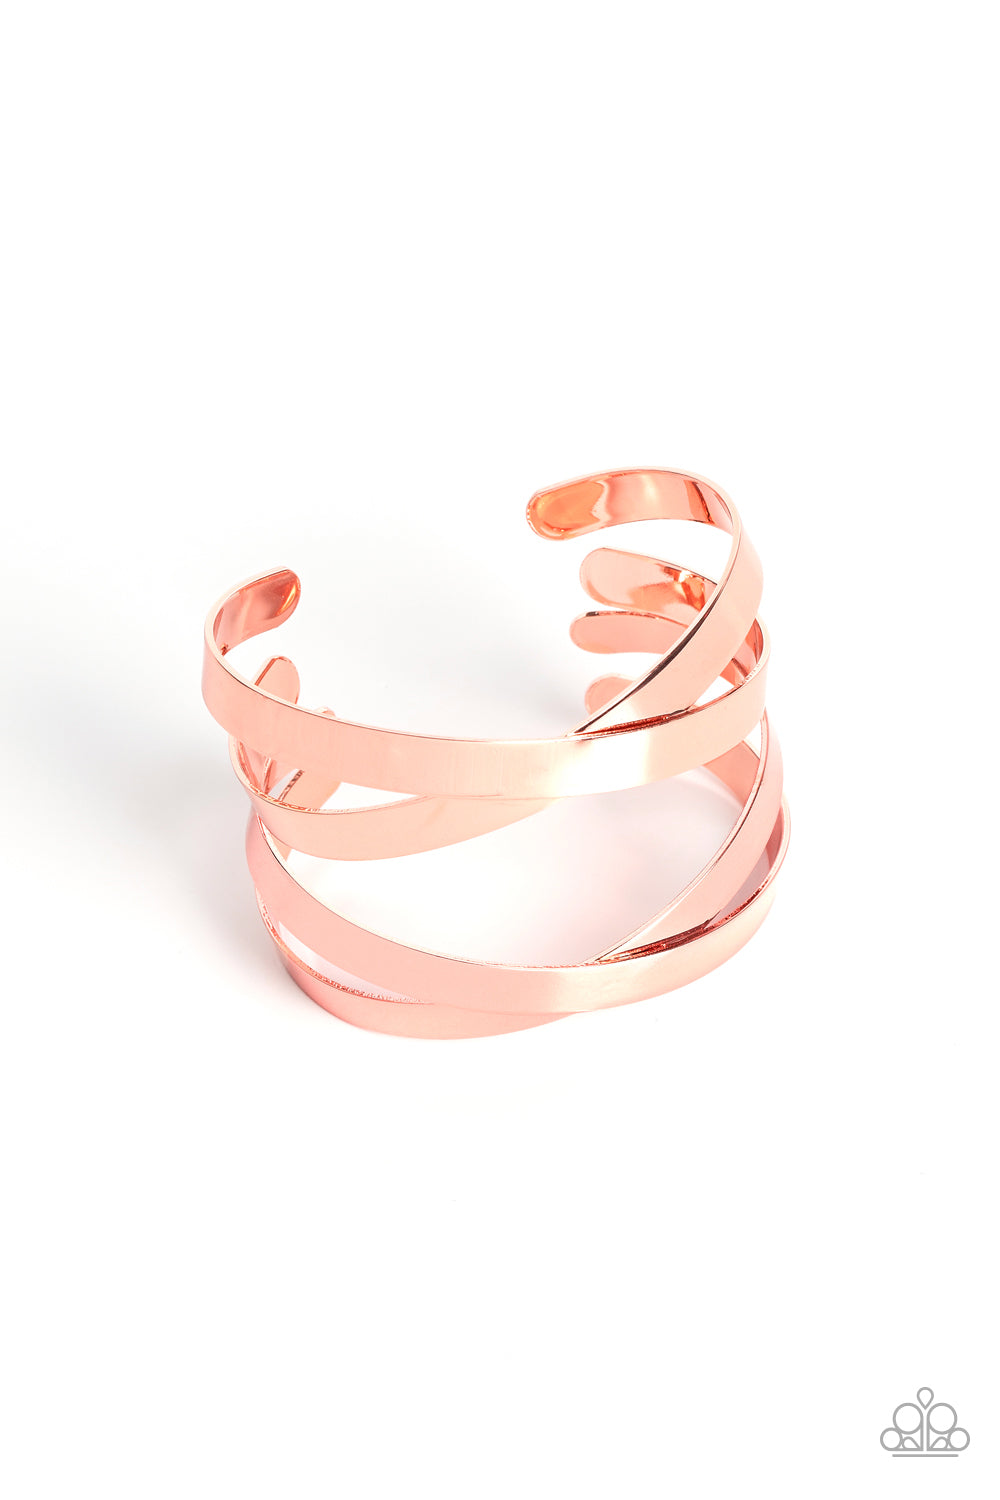 Industrial Imagination - Copper Cuff Bracelet - Princess Glam Shop